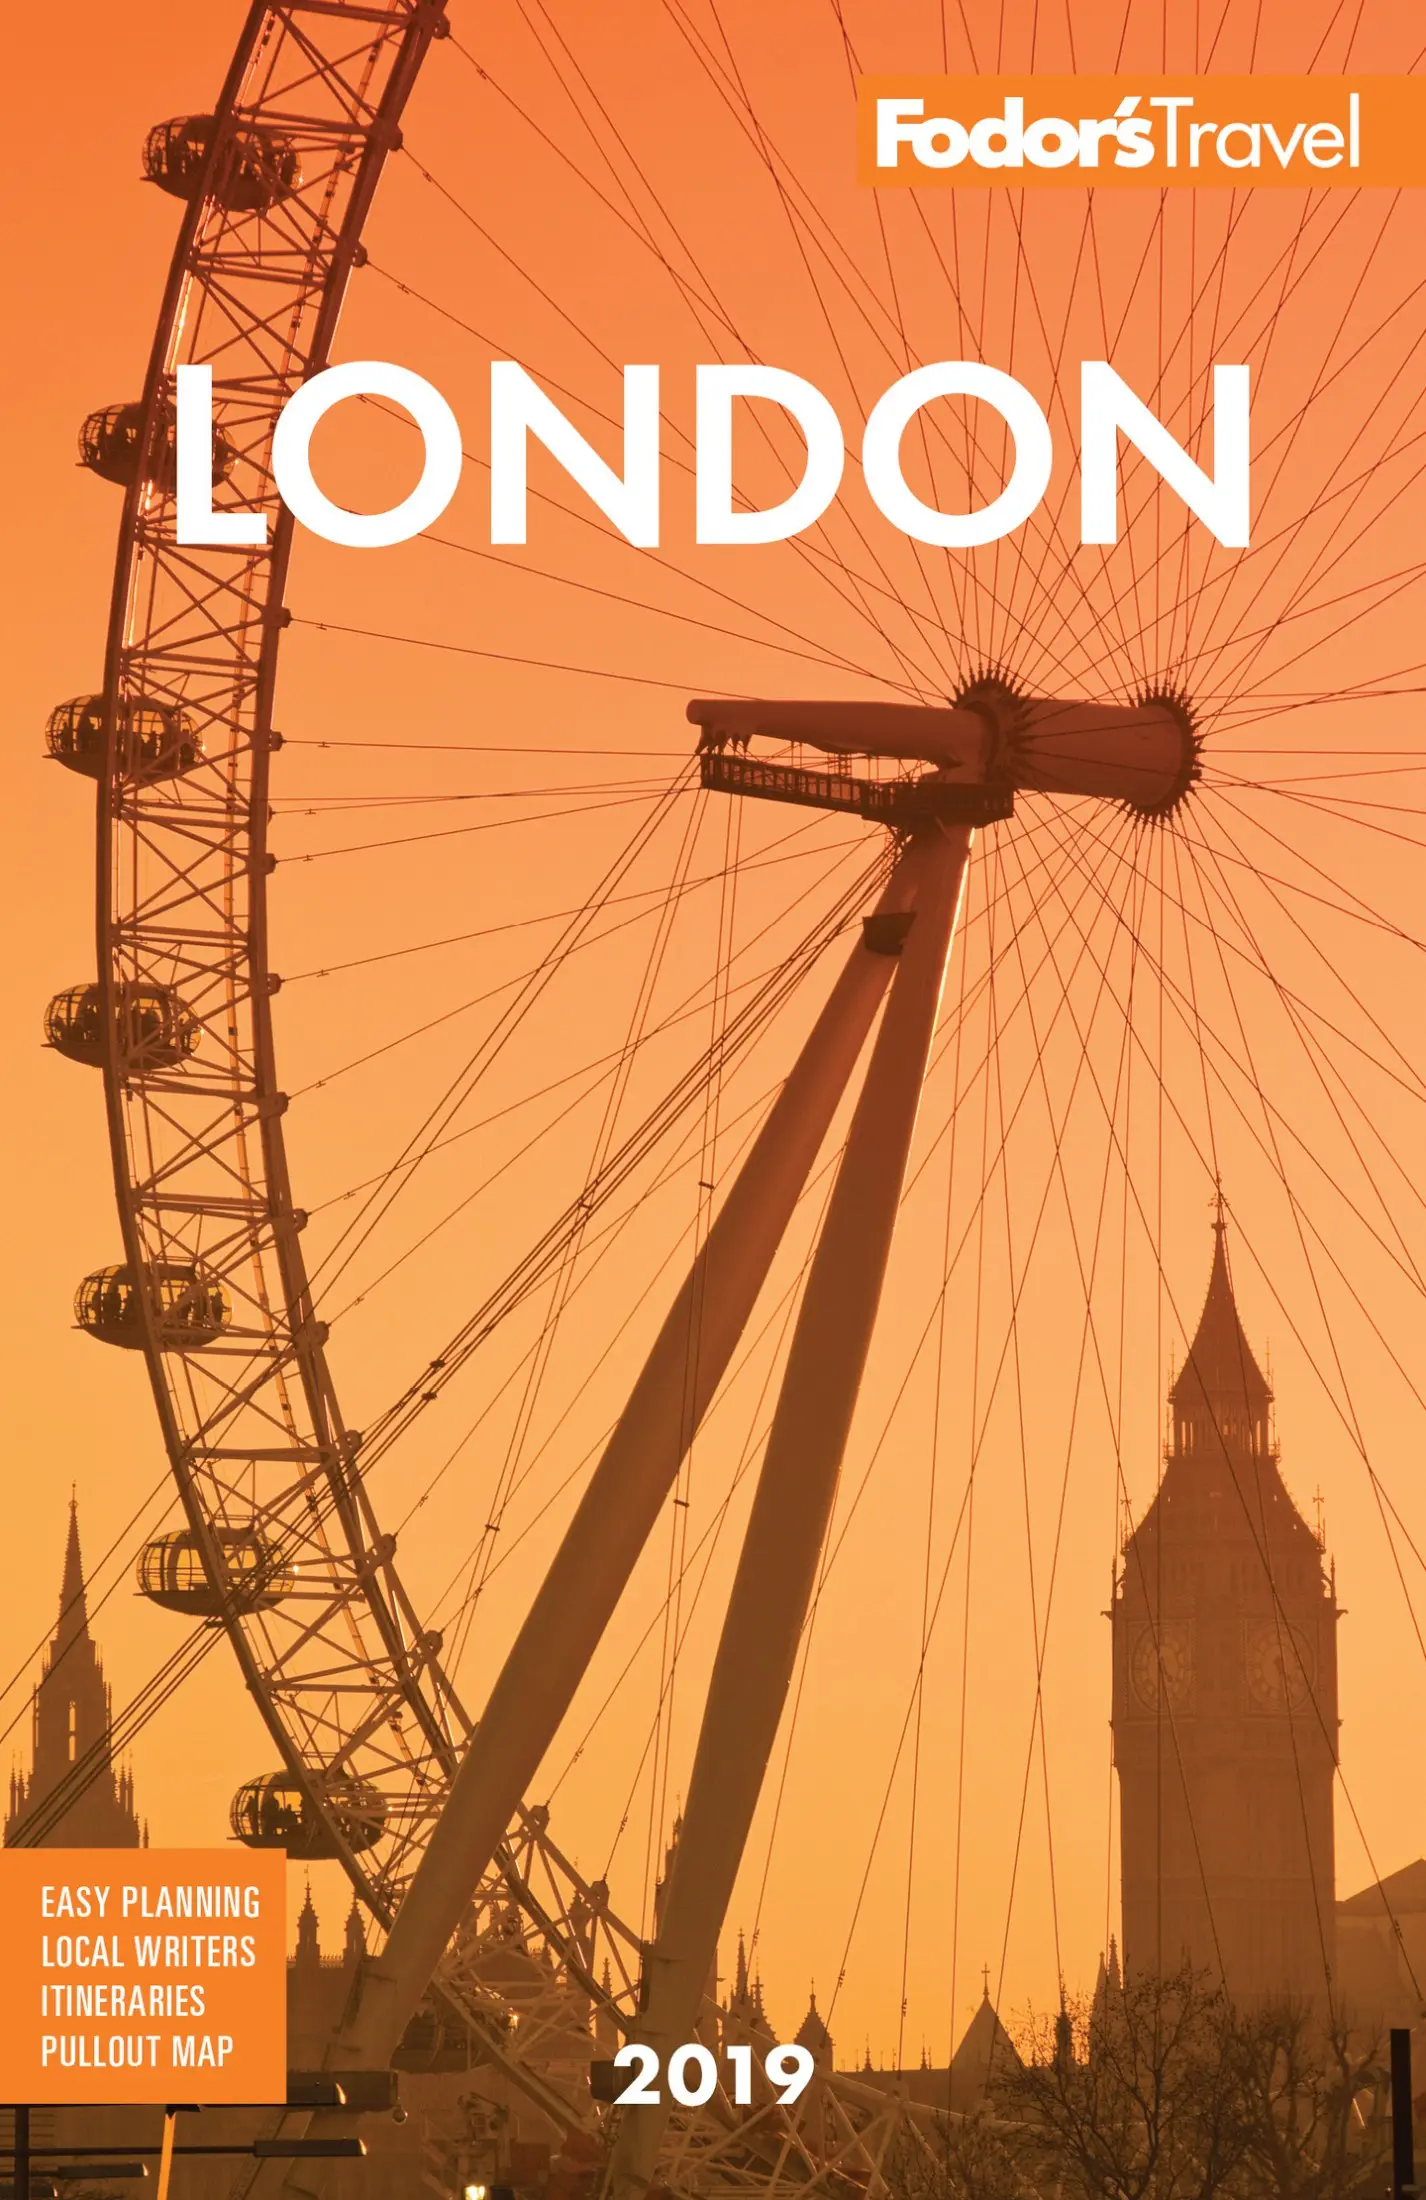 Fodor's London 2019 (Fullcolor Travel Guide), 34th Edition / AvaxHome